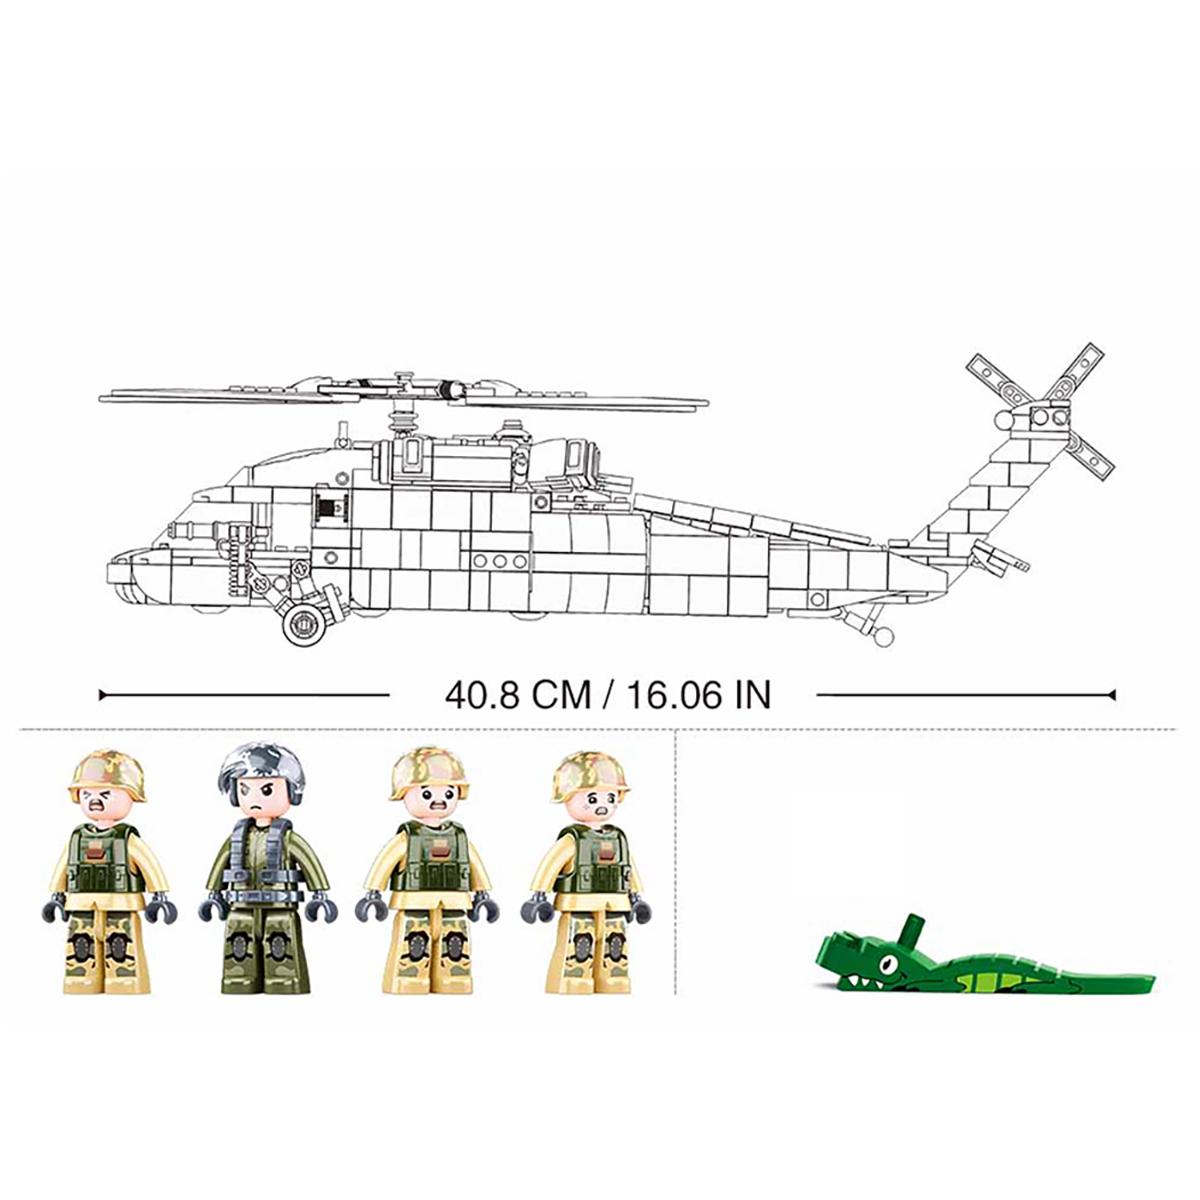 SLUBAN US Hubschrauber Army (692 Bausatz Teile) Medical